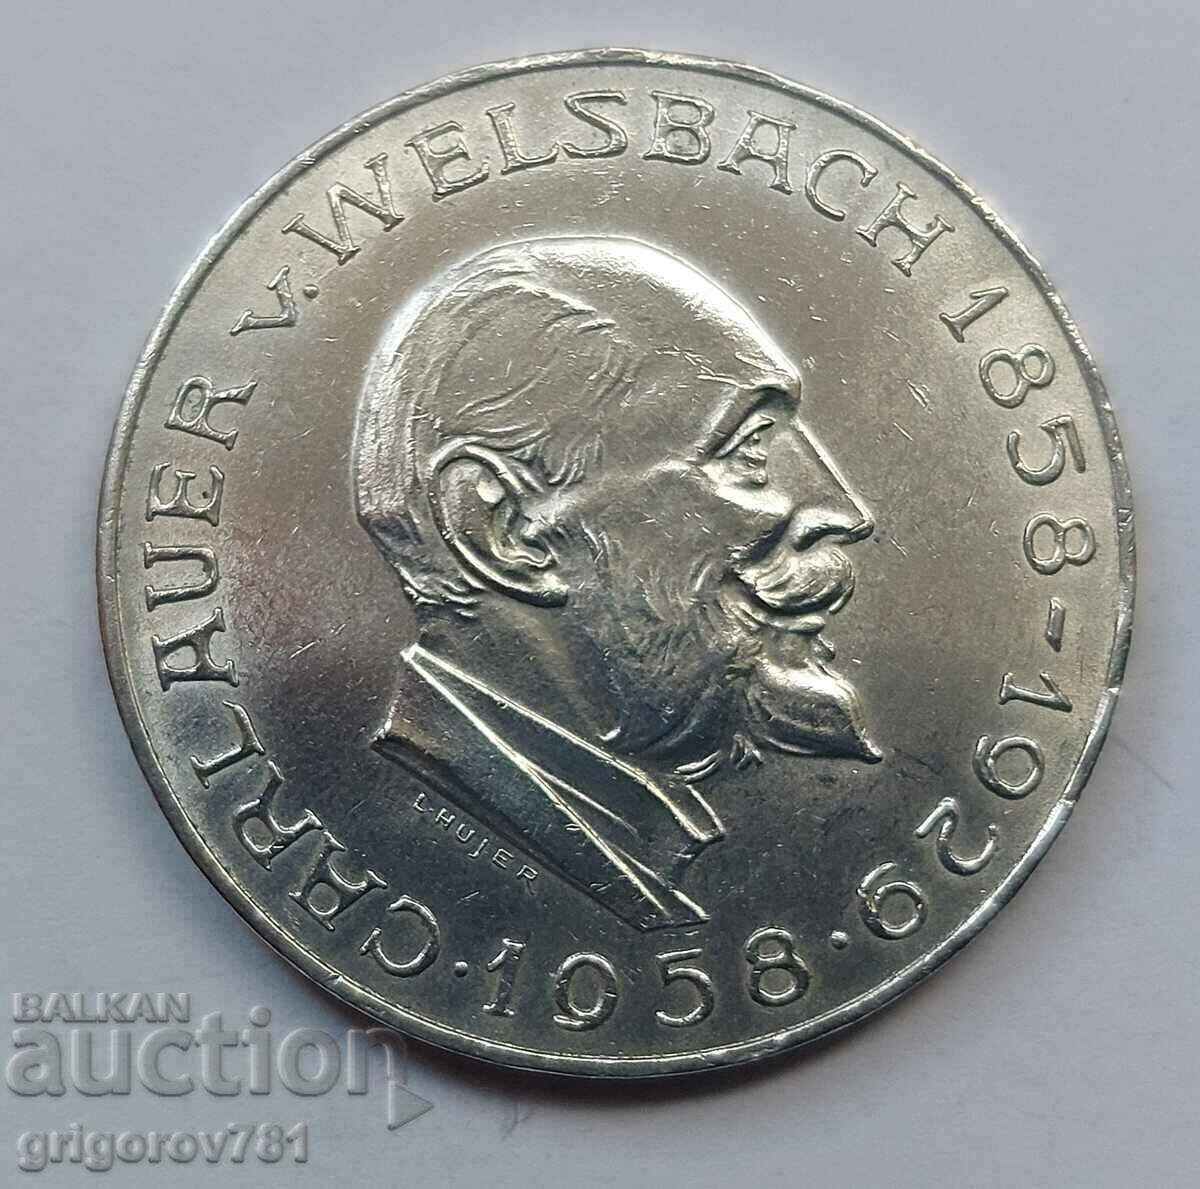 25 Shillings Silver Austria 1958 - Silver Coin #10